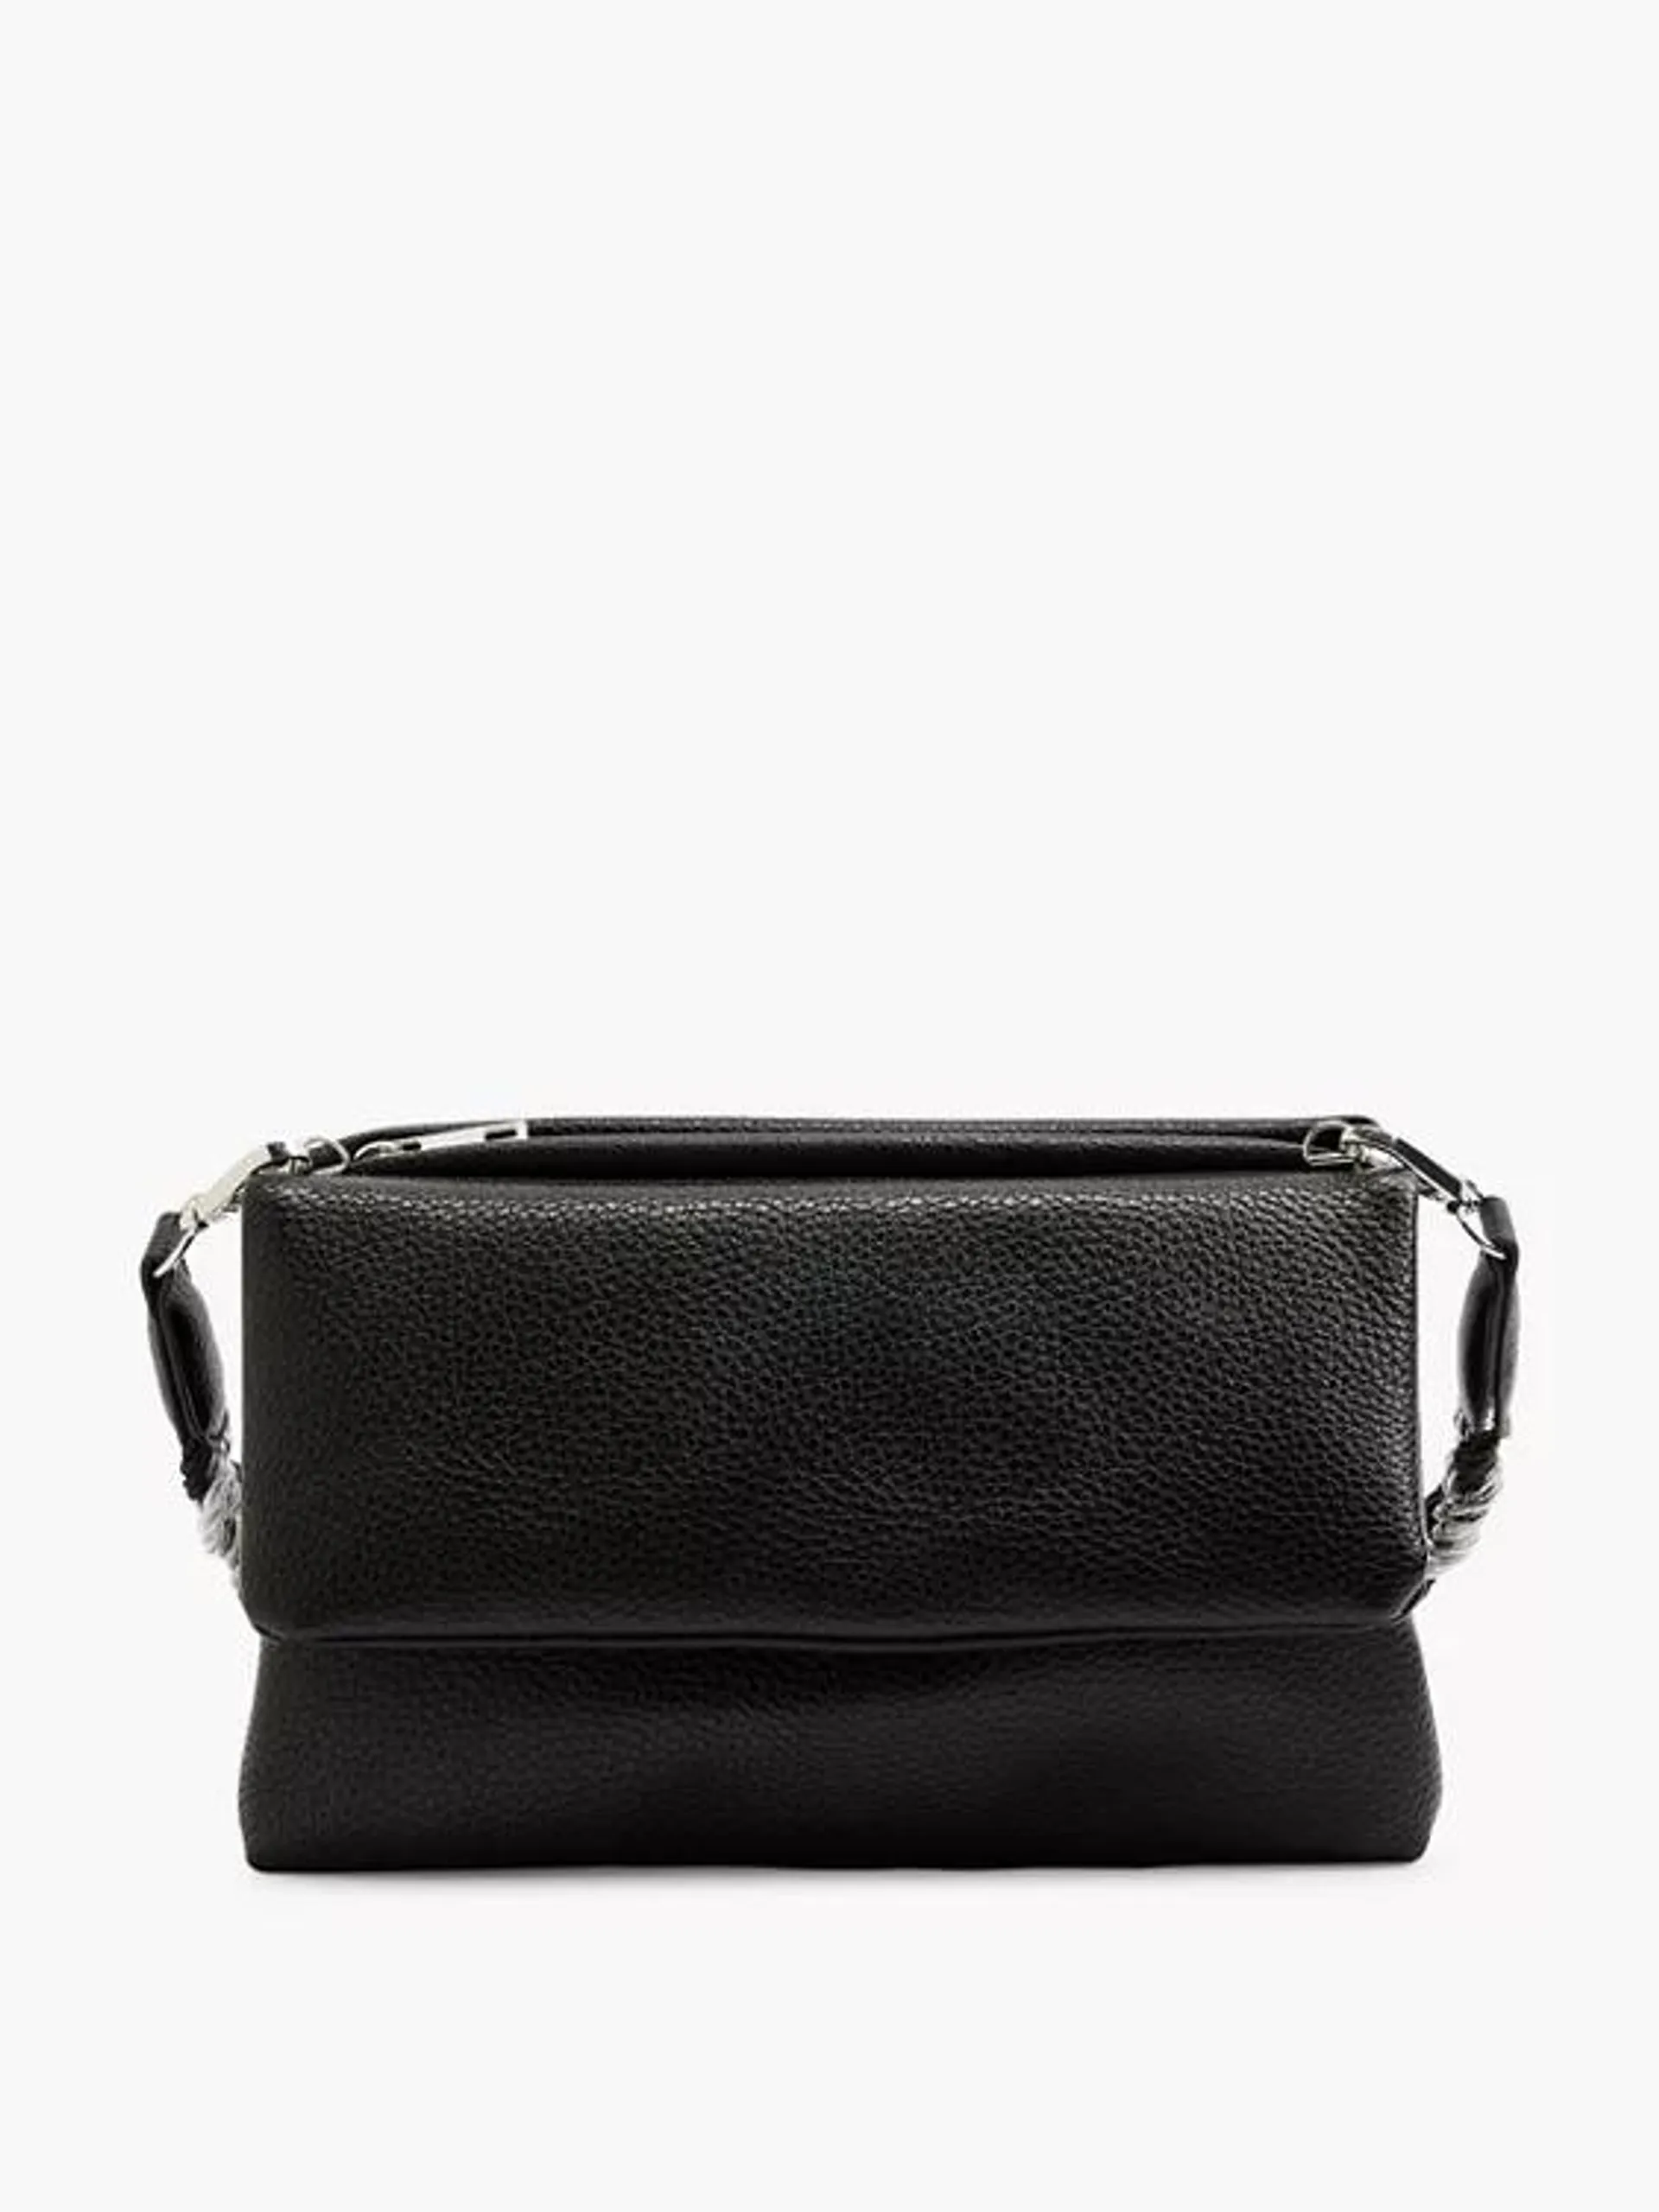 Black Handbag with Silver and Black Braided Handle